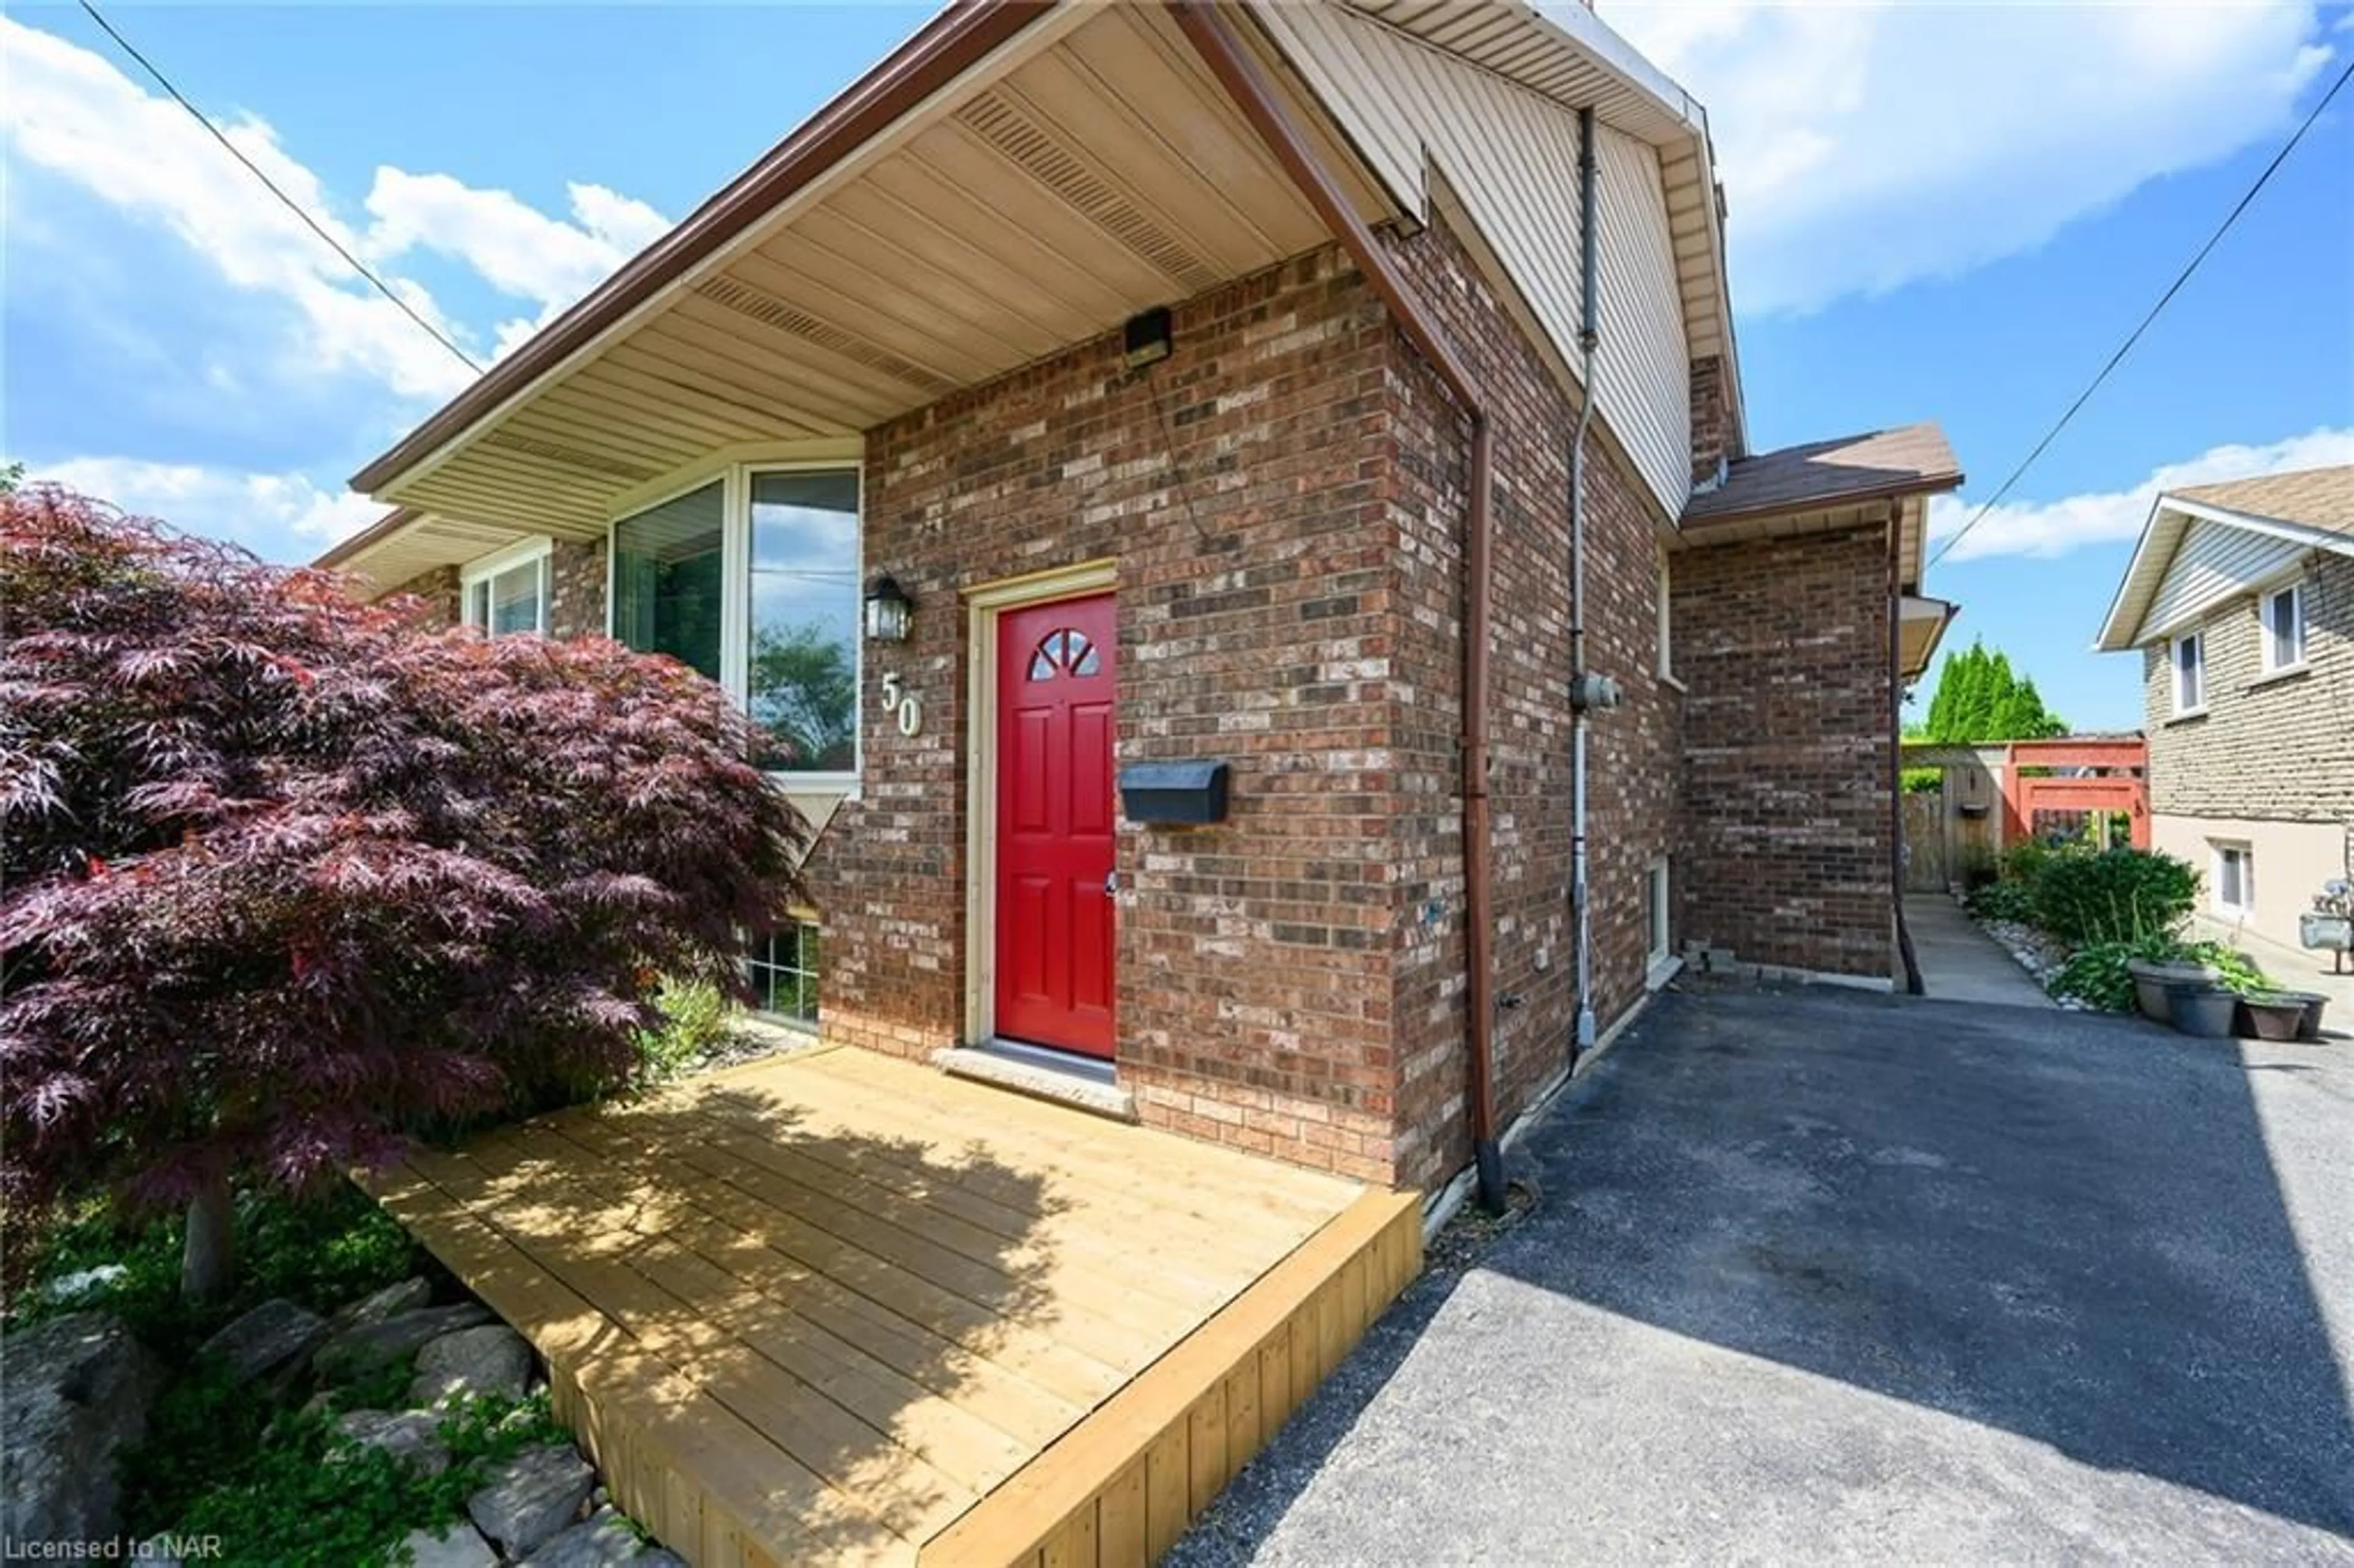 Home with brick exterior material for 50 Adis Ave, Hamilton Ontario L9C 6V3